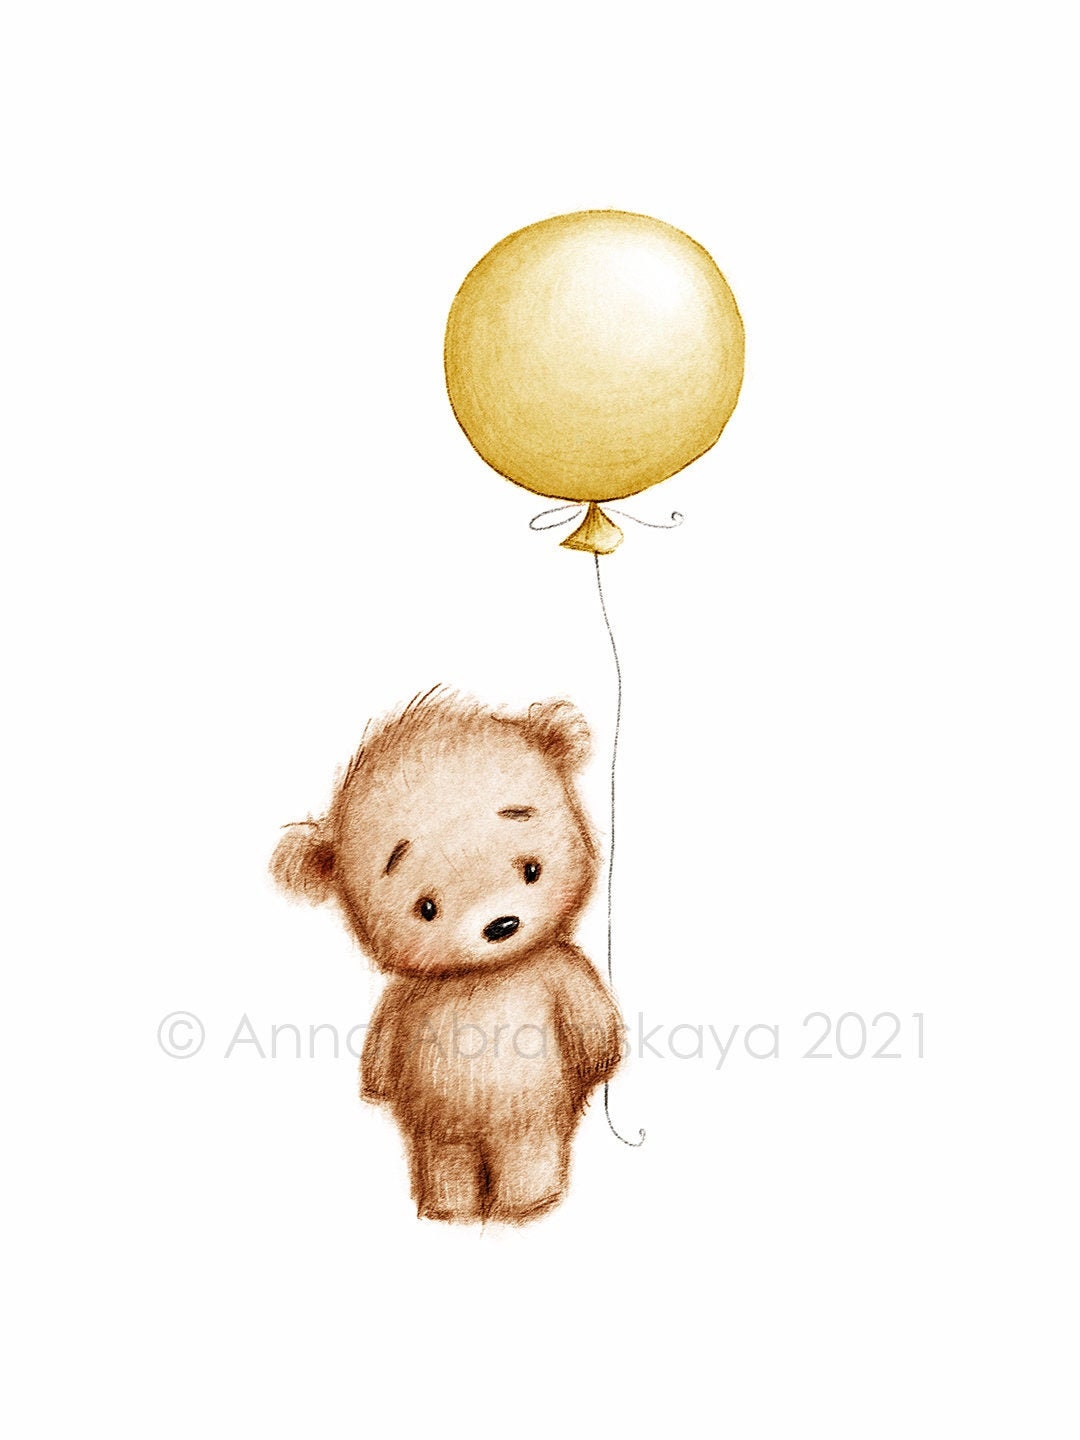 How to draw a cute teddy bear - Quora